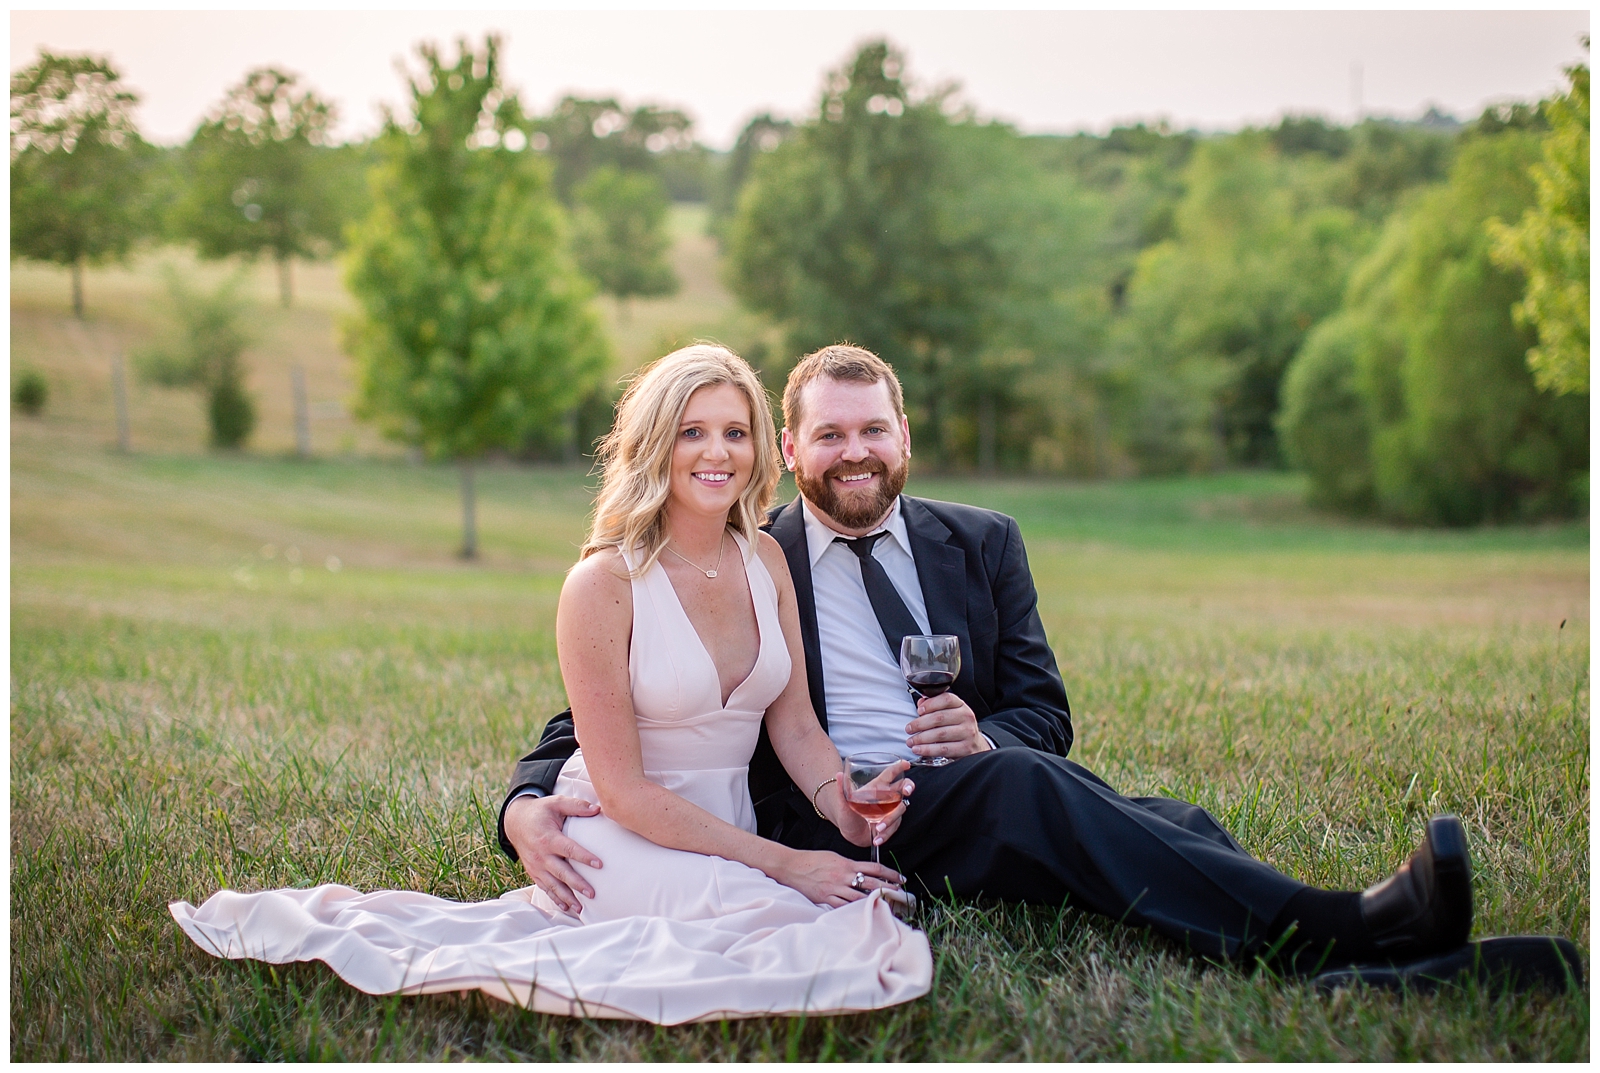 Engagement photography at Ladoga Ridge Winery by Kansas City wedding photographers Wisdom-Watson Weddings.